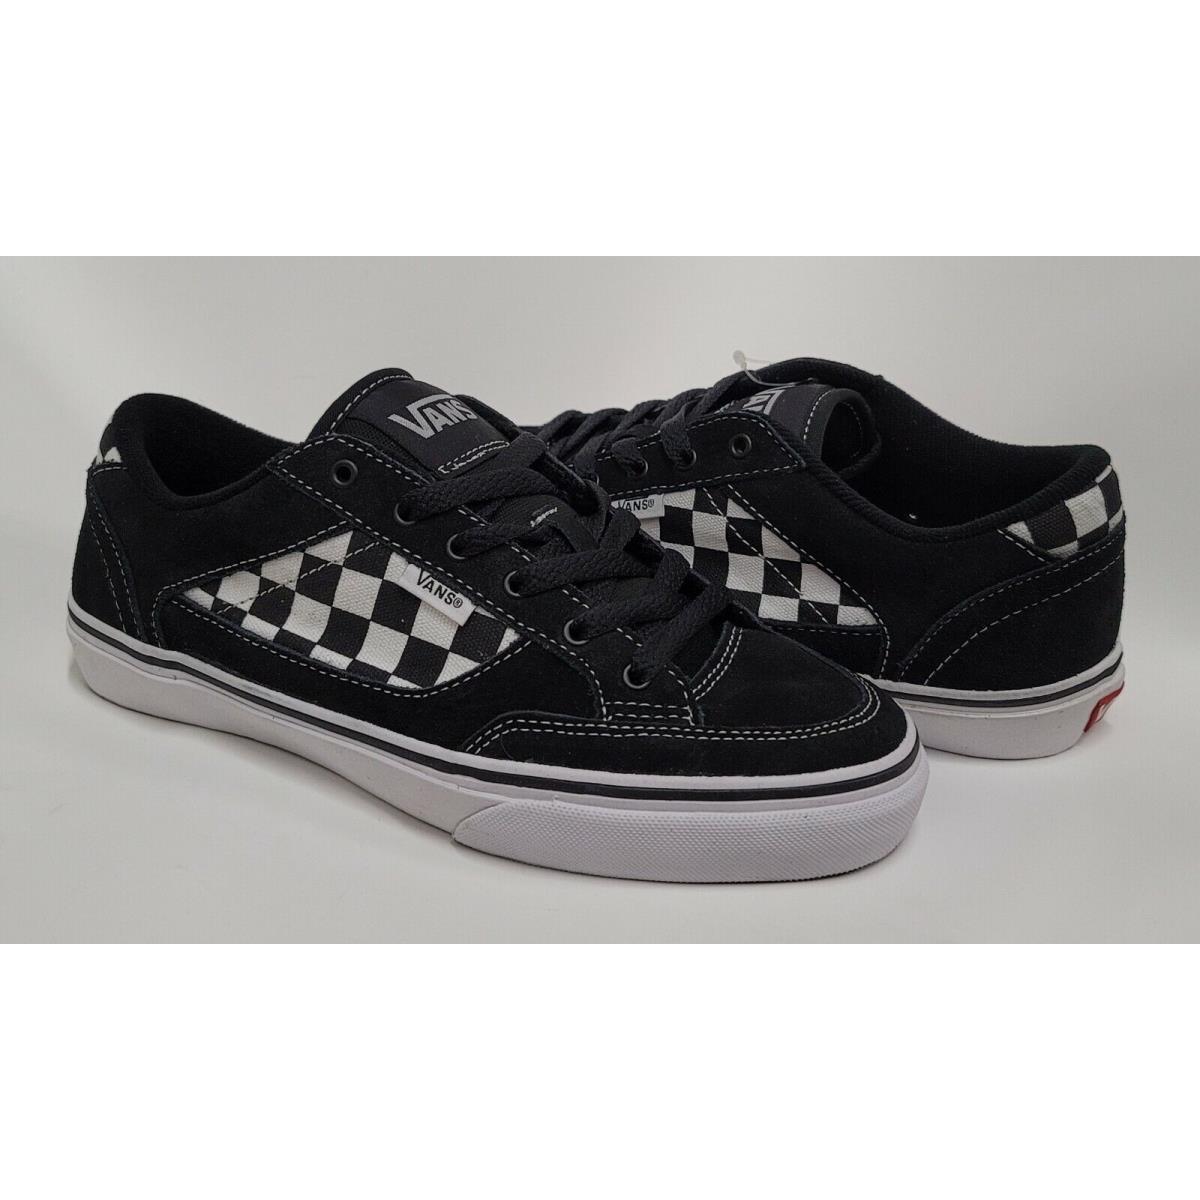 Vans Junior / Grade School Brasco Shoe Black / White Checkerboard VN-0DDX56M